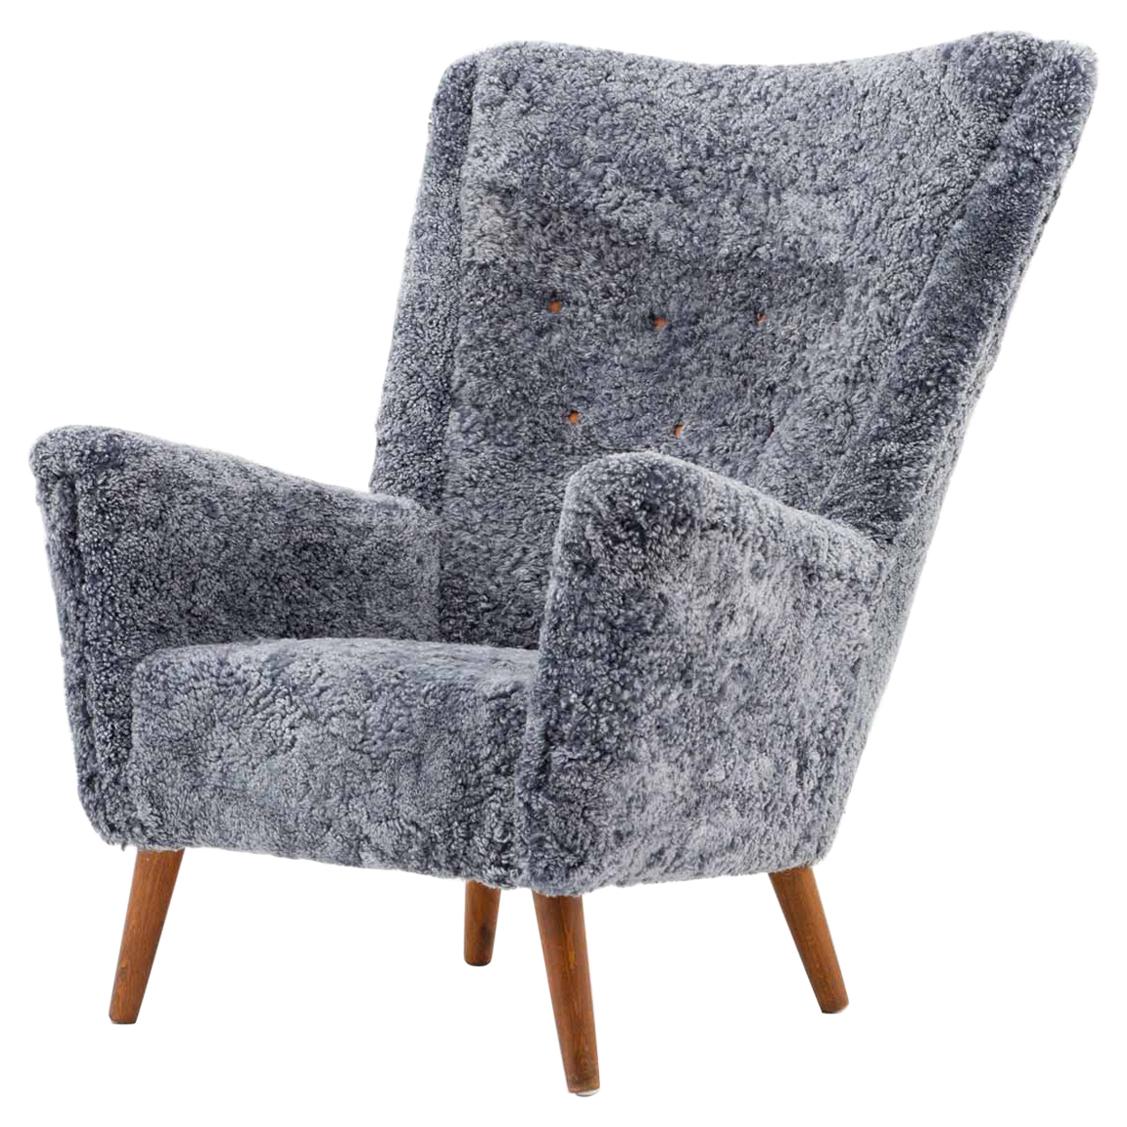 Danish Midcentury Lounge Chair in Sheepskin